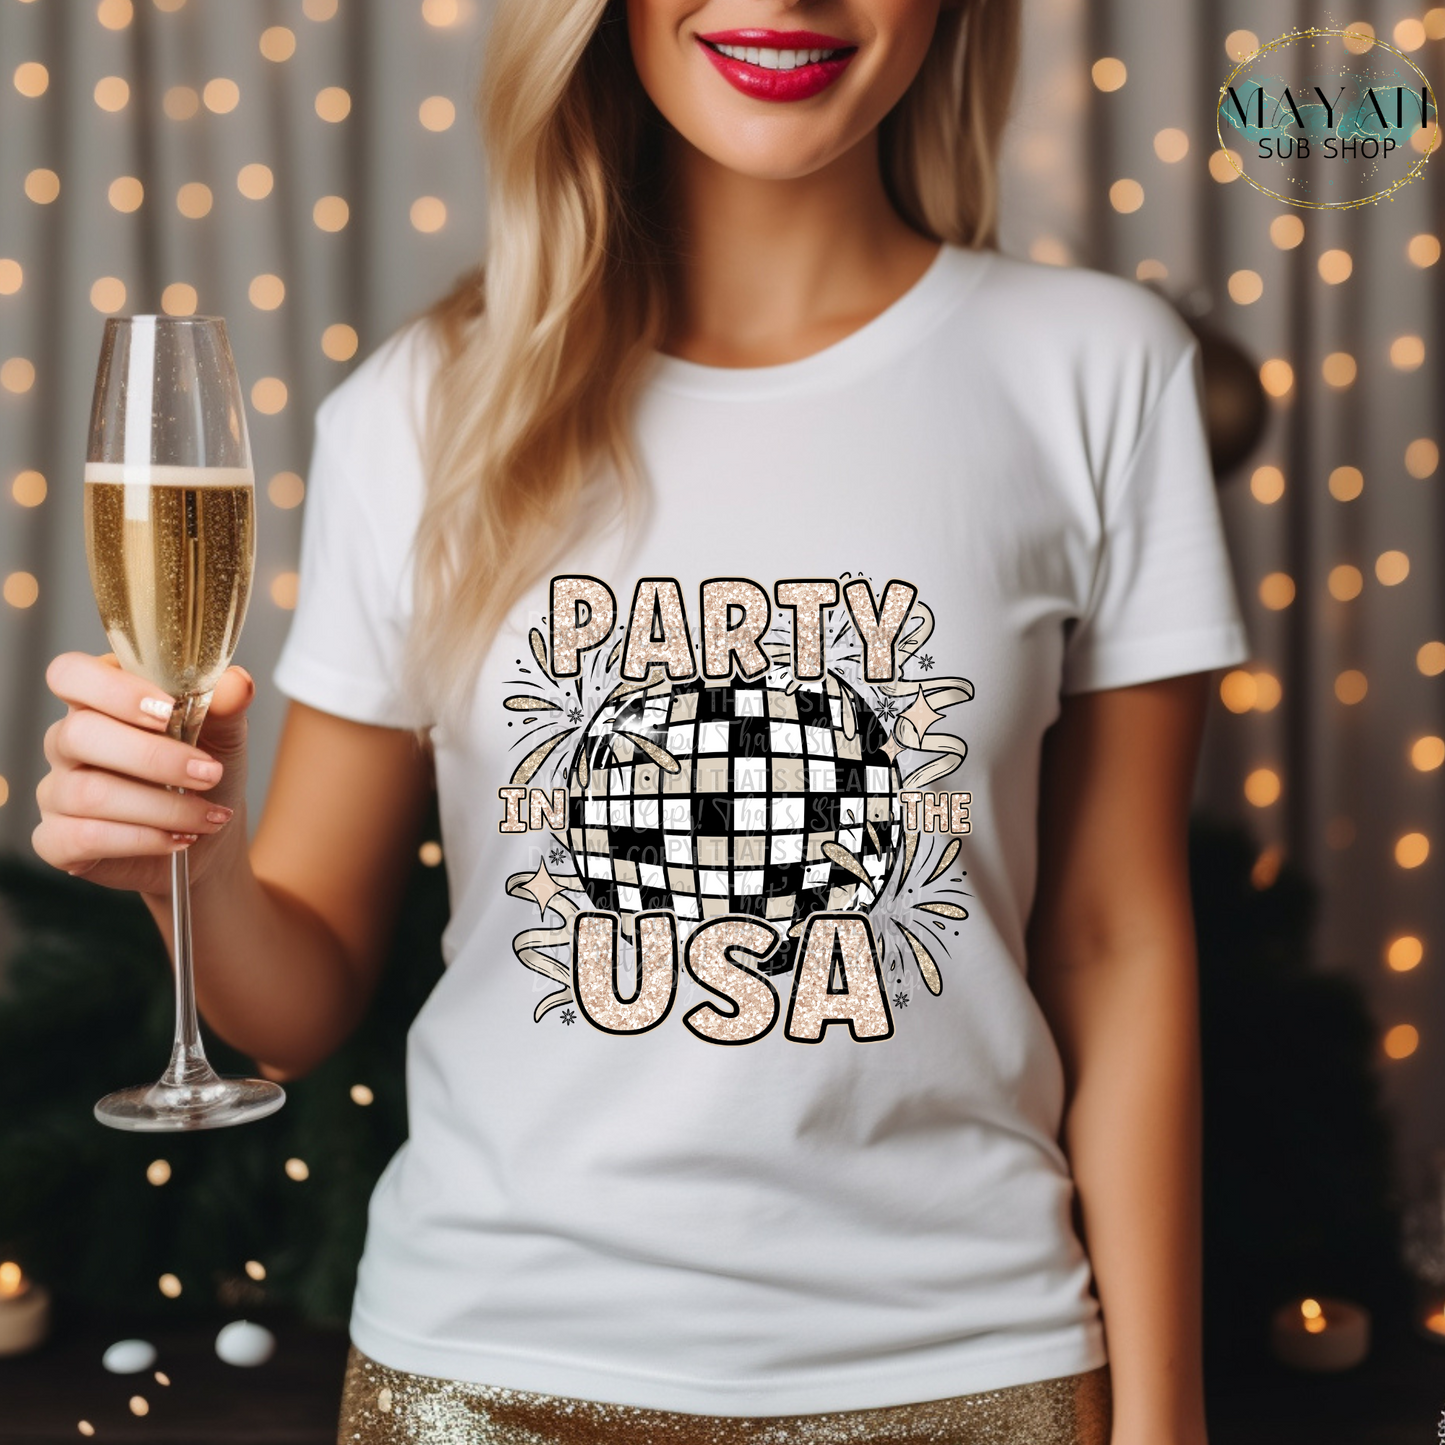 USA party shirt. -Mayan Sub Shop